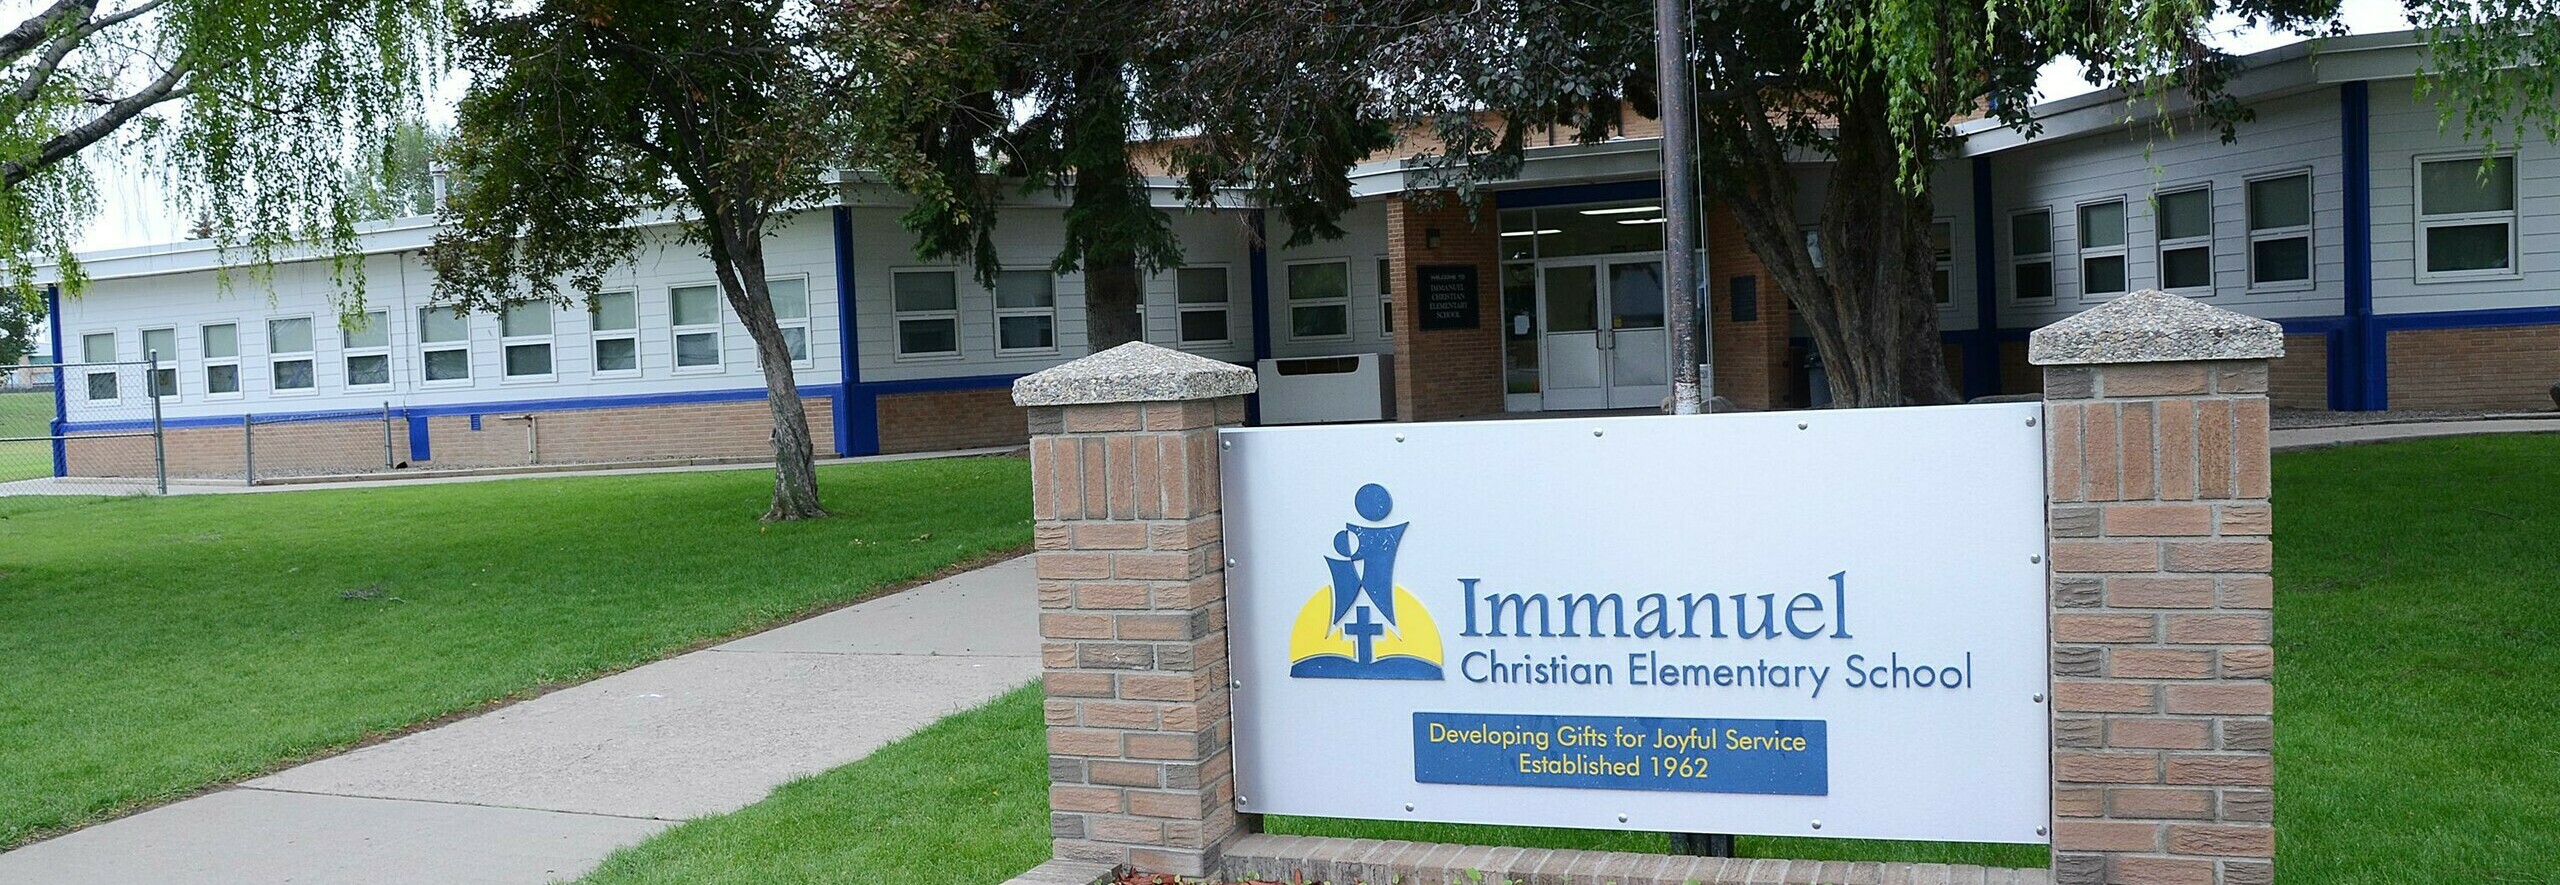 Immanuel Christian Elementary School Banner Photo